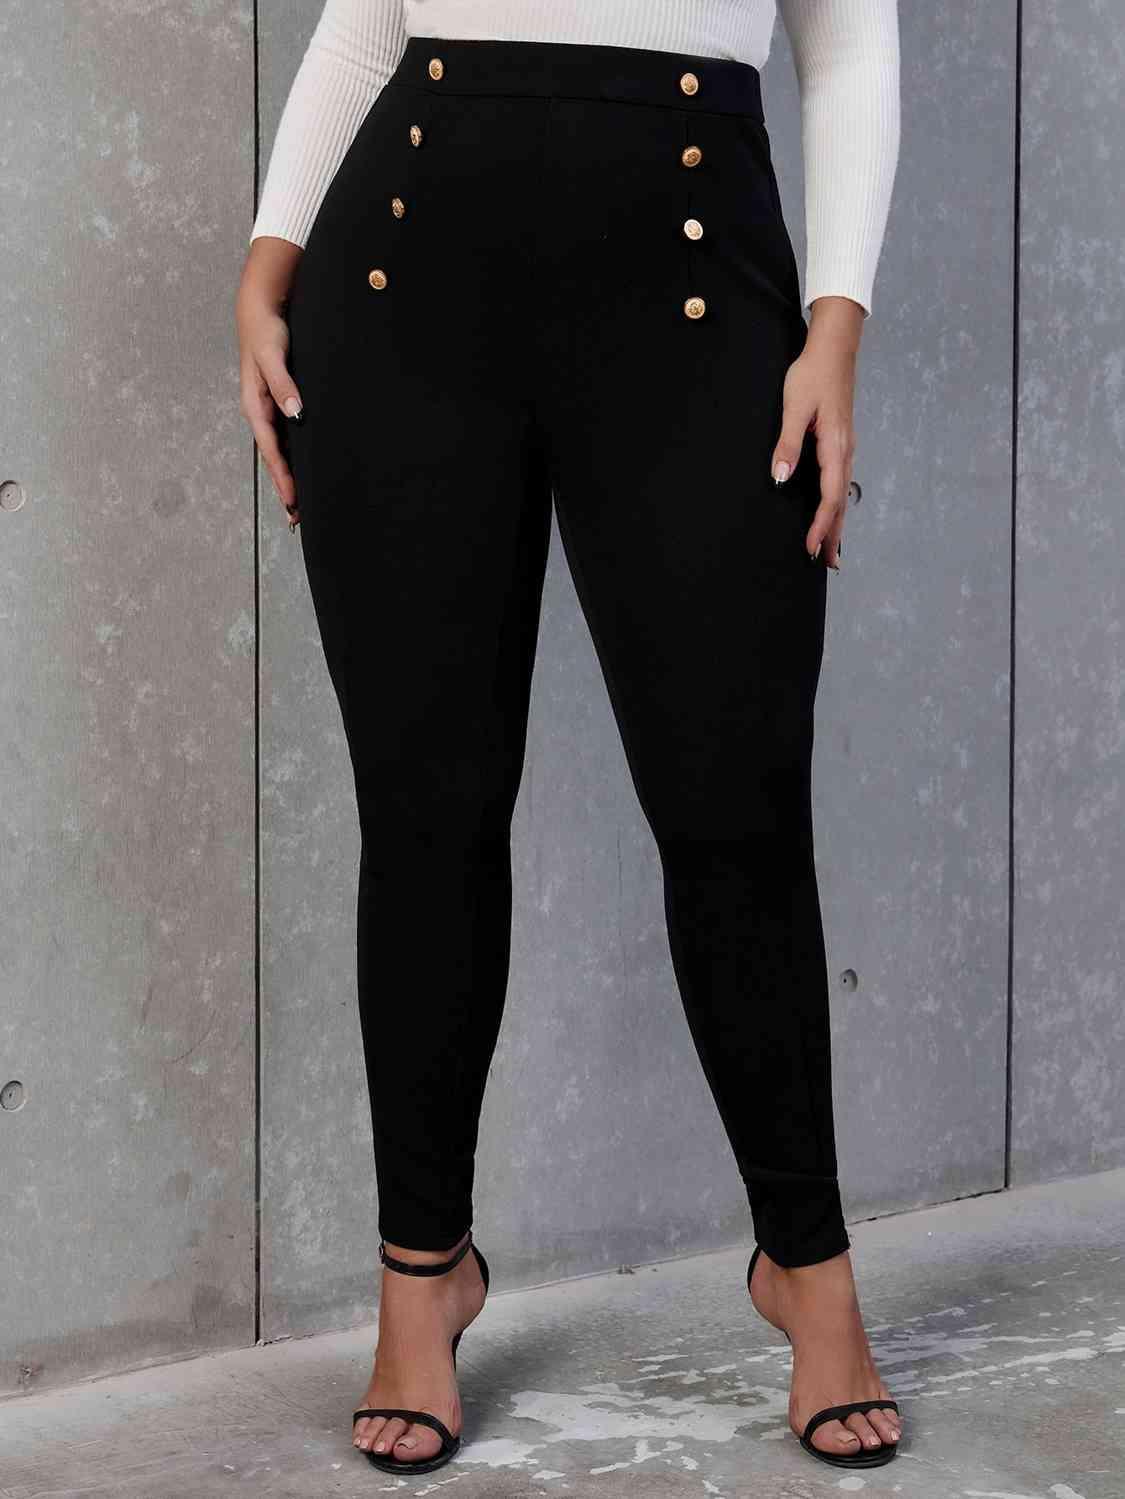 Decorative Button Plus Size Black Skinny Pants - MXSTUDIO.COM